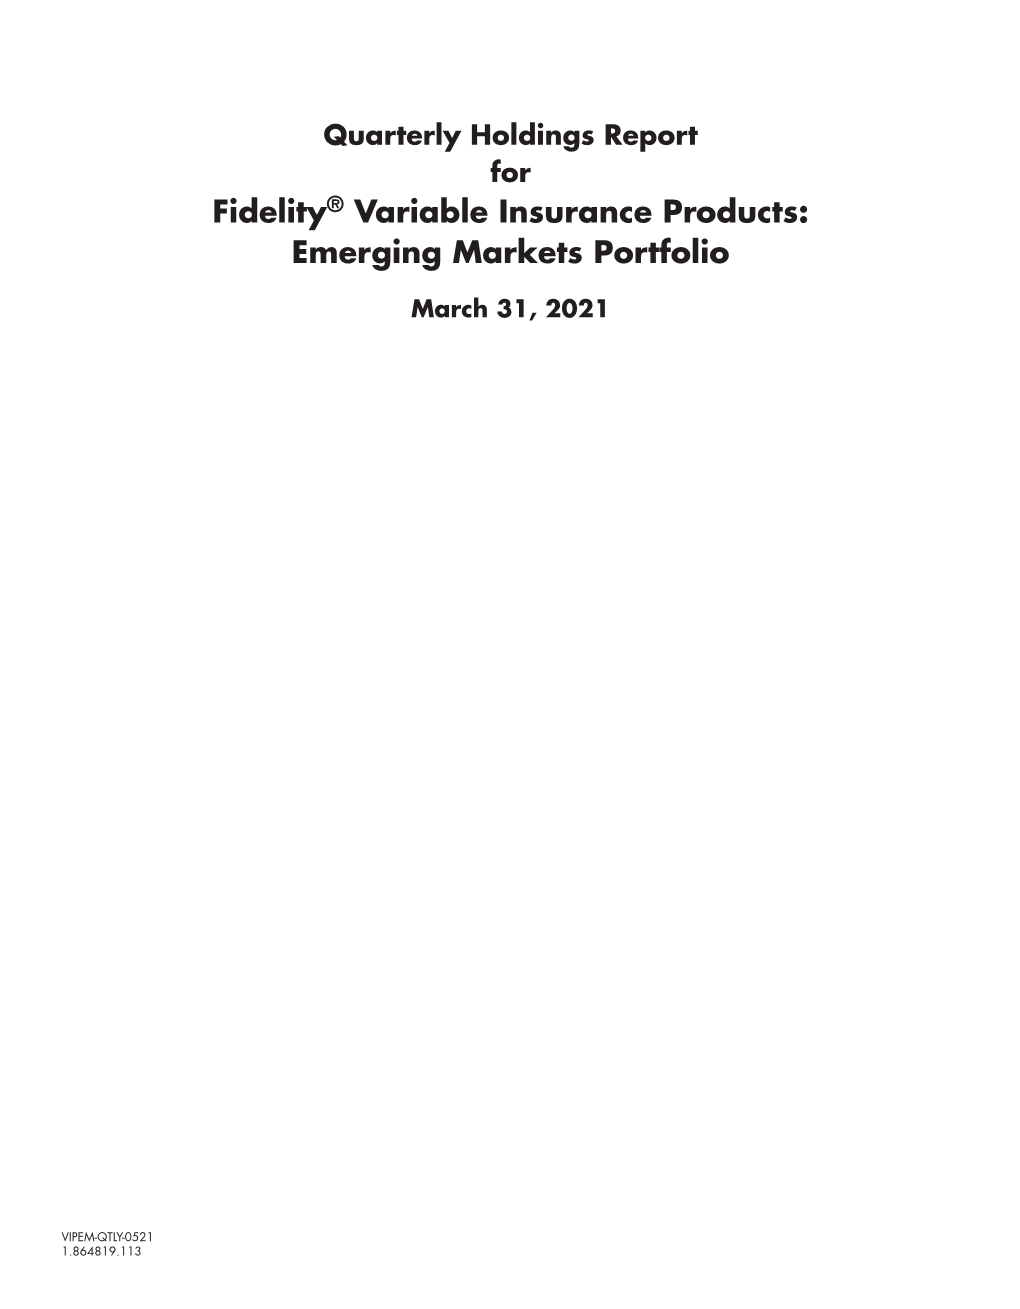 Fidelity® Variable Insurance Products: Emerging Markets Portfolio